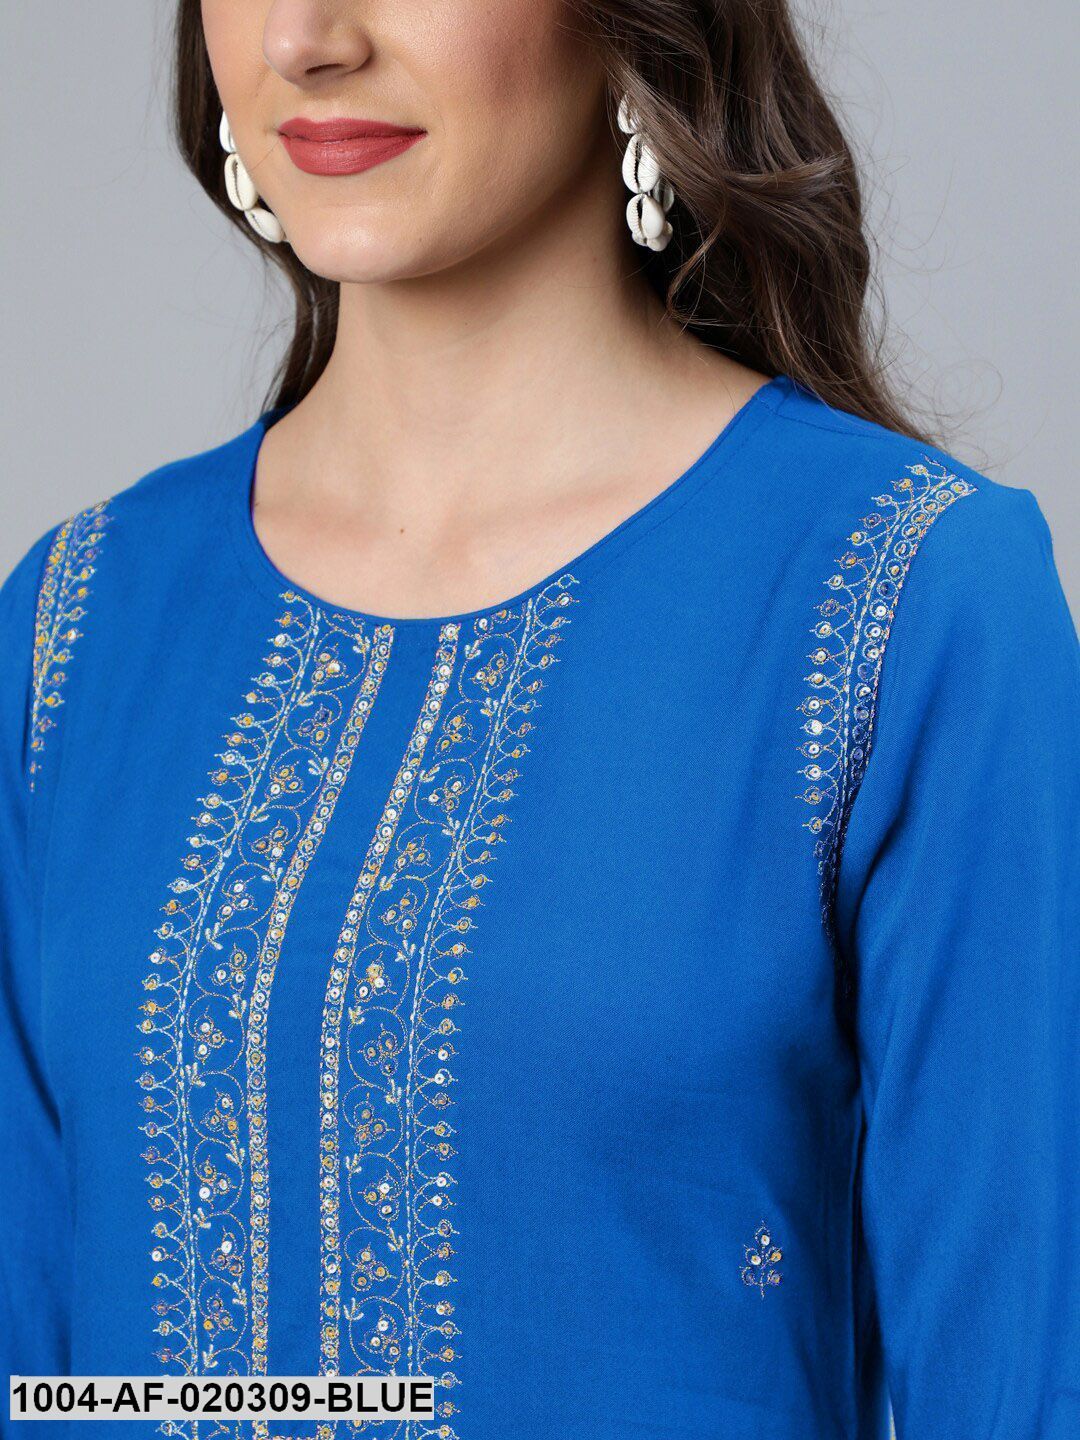 Gigi Hadid, Zayn Malik celebrate Eid in style; dress up in ethnic wear |  Fashion News - The Indian Express